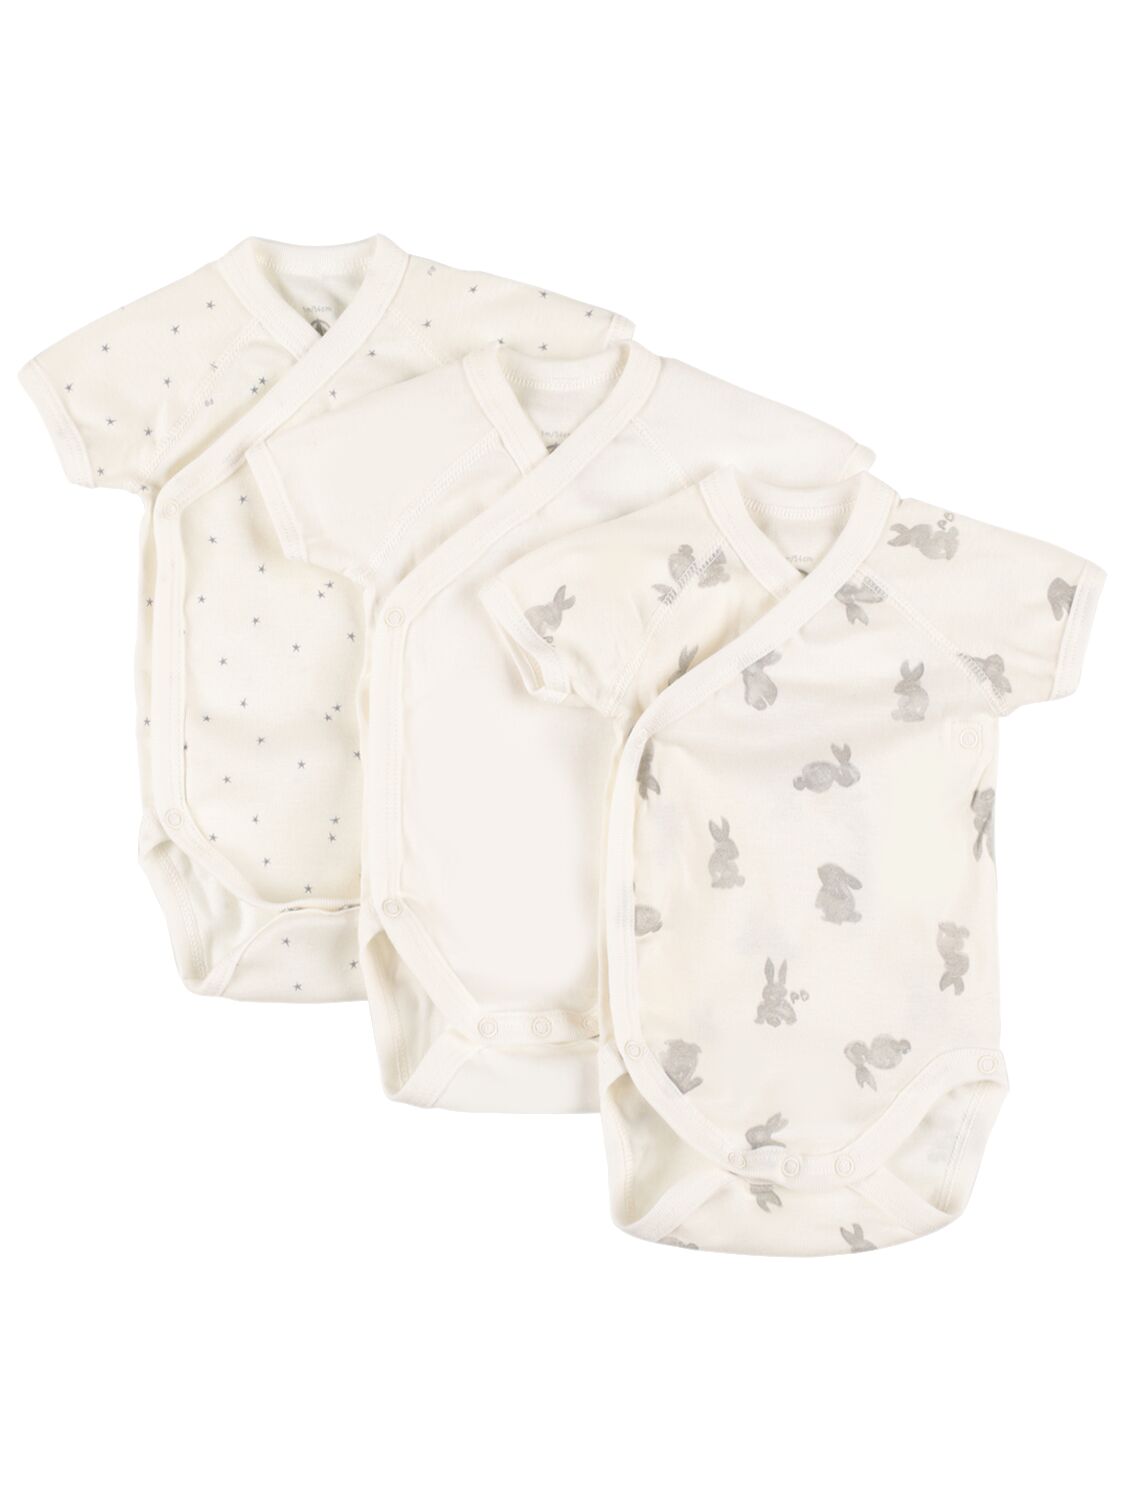 Petit Bateau Babies' Set Of 3 Printed Cotton Bodysuits In Multicolor